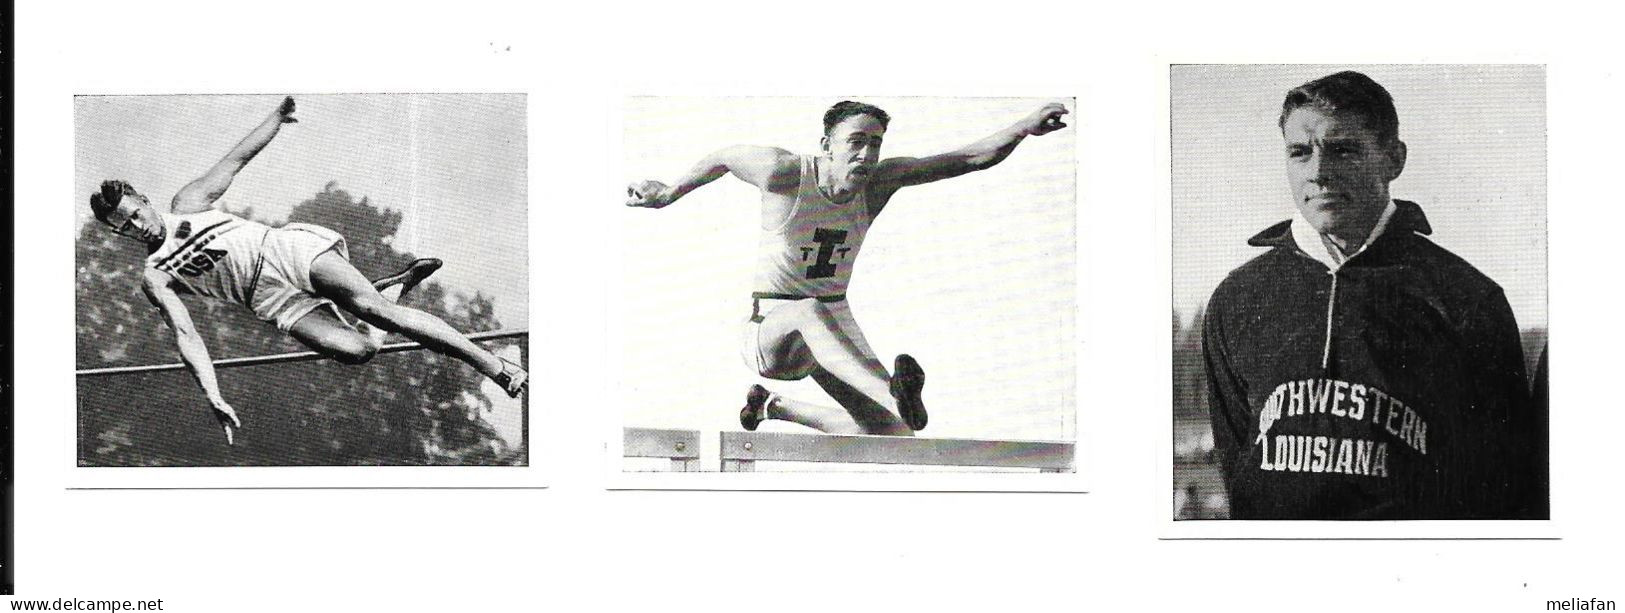 AH71 - IMAGES CIGARETTES LIGA - REKORD IM SPORT - JOHN MORRIS - WALTER MARTY - CHARLES BROOKINS - Athlétisme